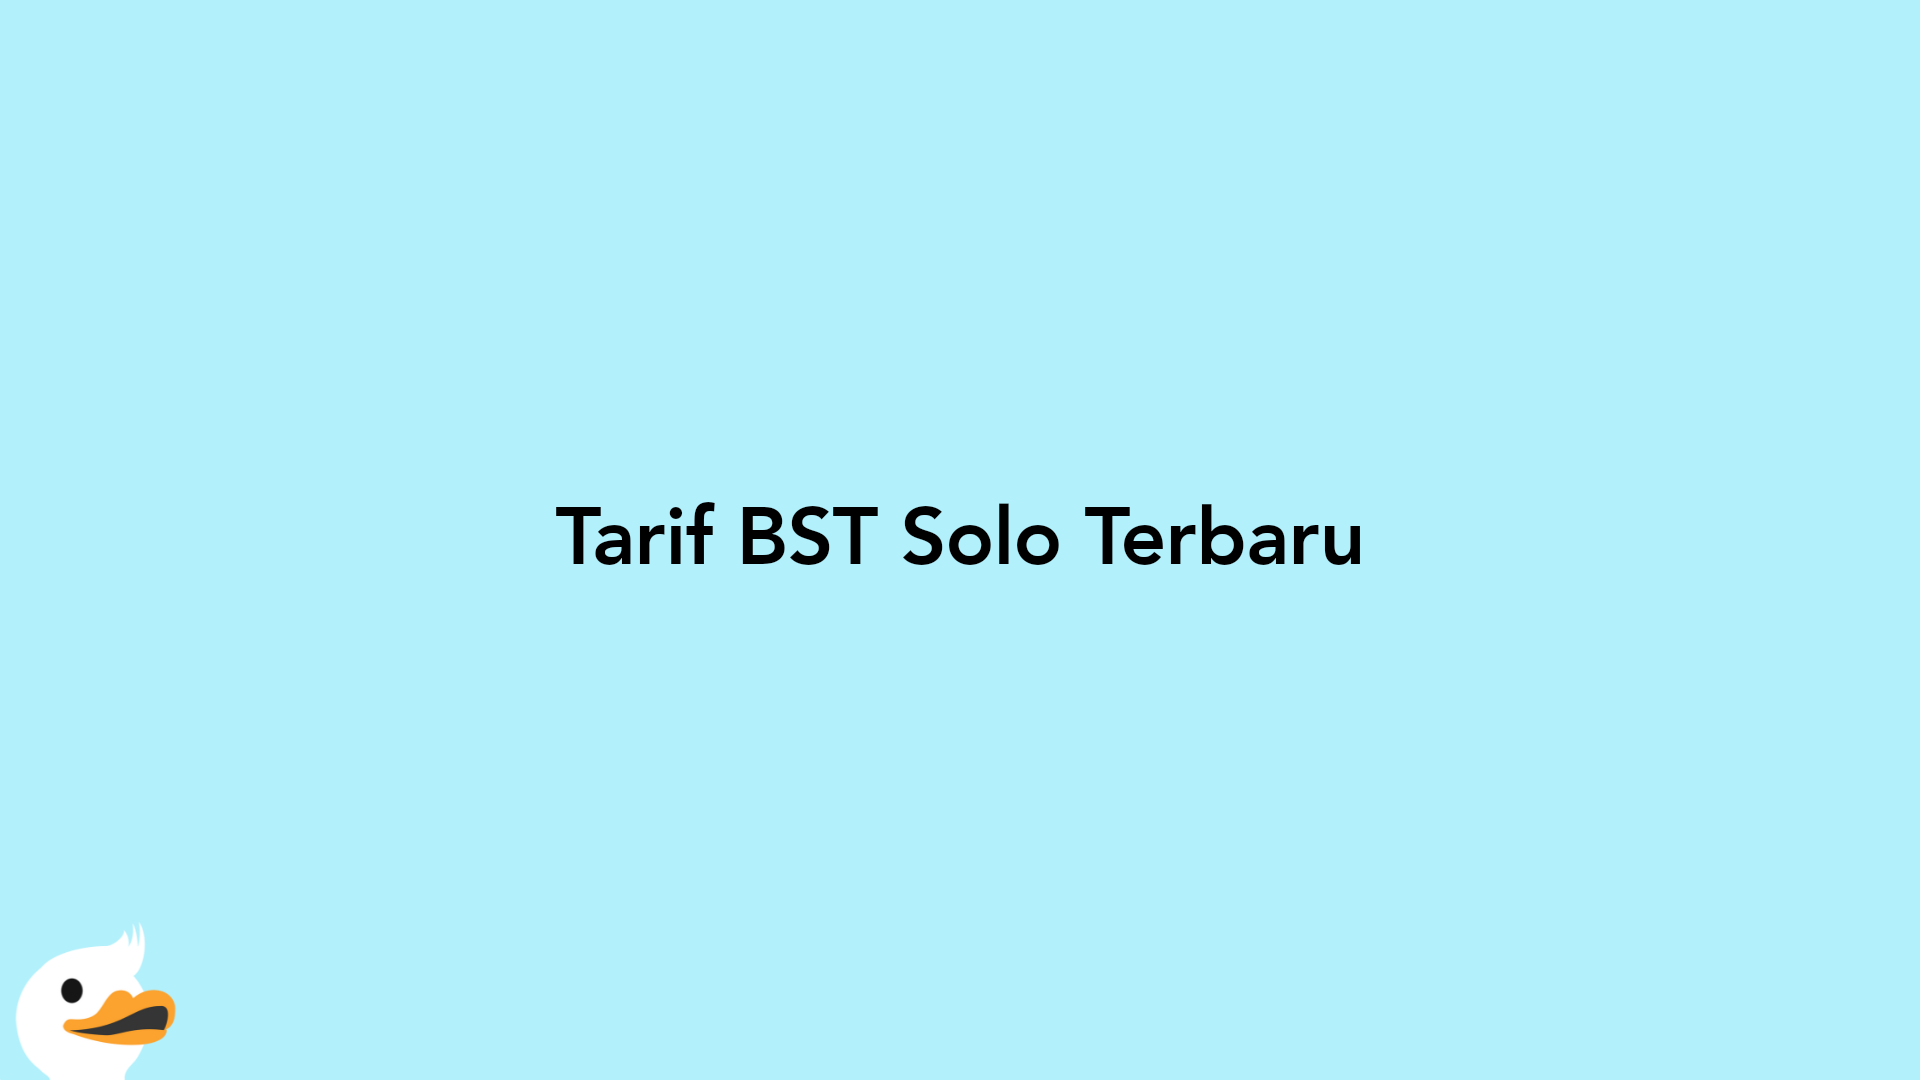 Tarif BST Solo Terbaru